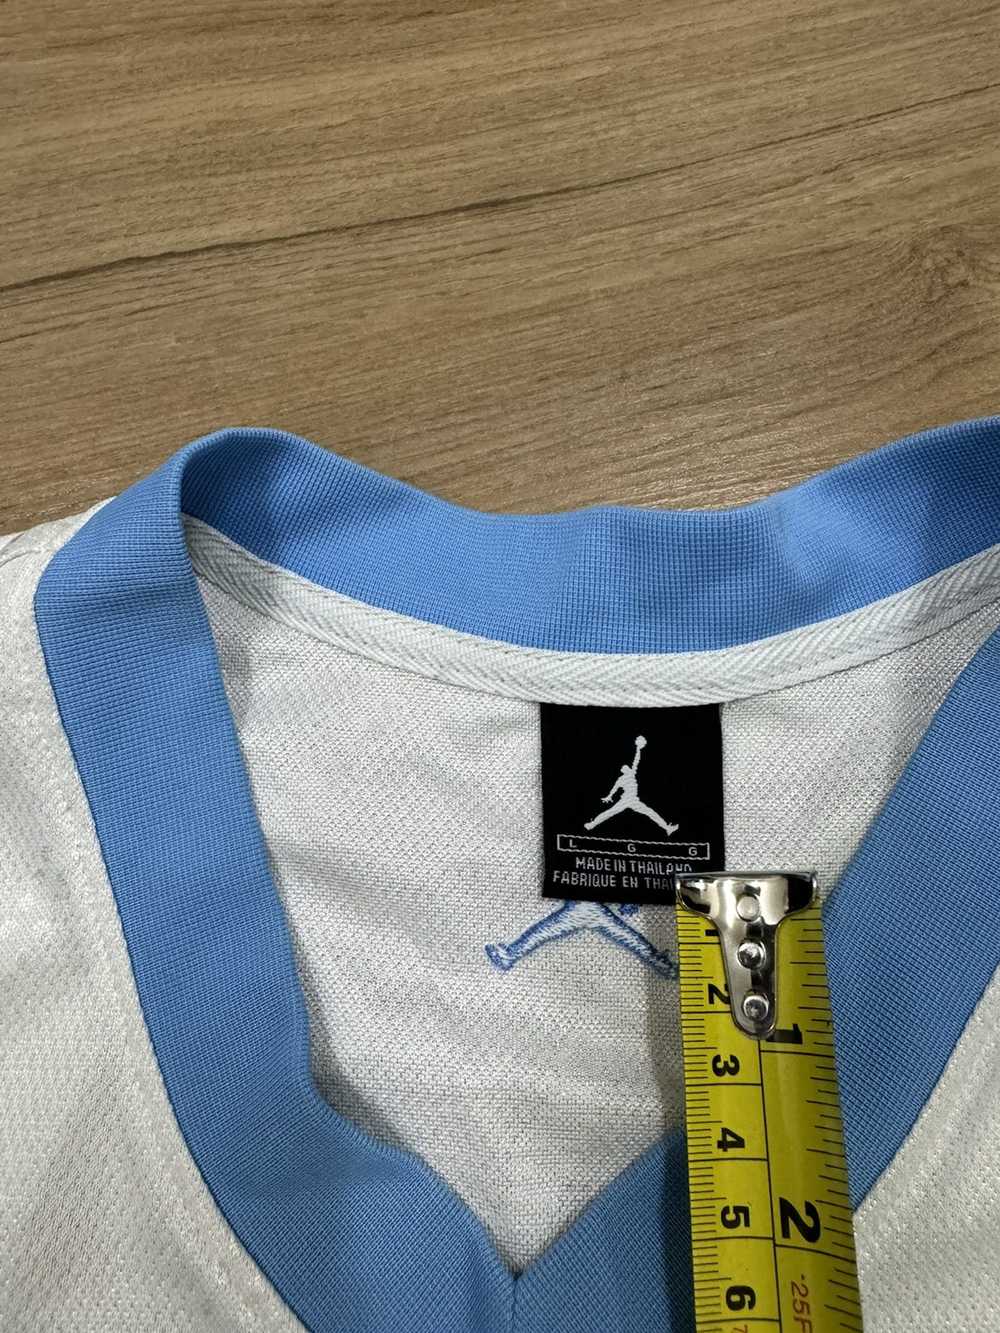 Jordan Brand Vintage Air Jordan 23 NBA Shirt - image 4